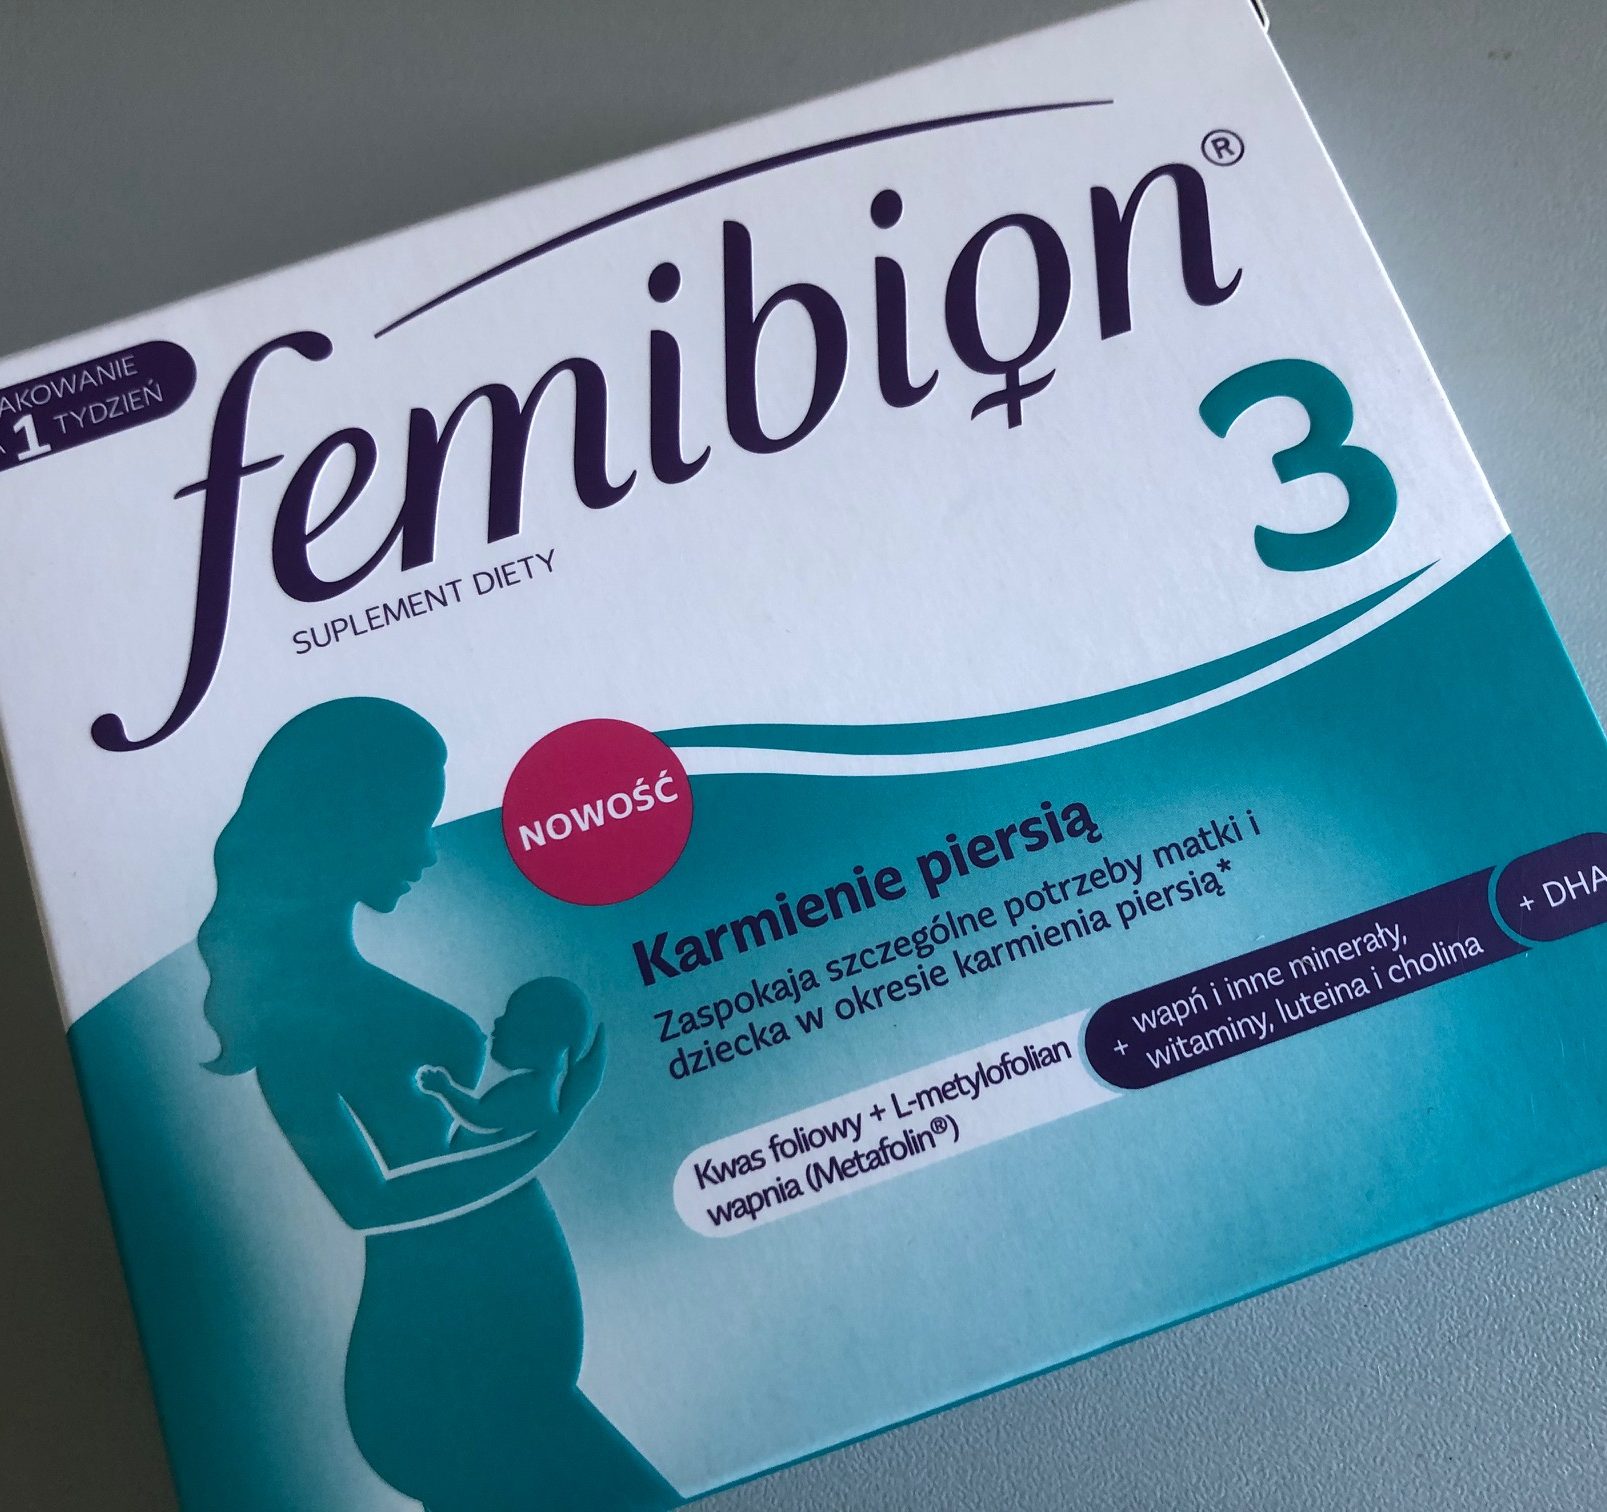 3 семестр беременности. Фемибион 3. Таблетки для беременных фемибион 3 триместр. Витамины для беременных 3 триместр фемибион 3. Витамины в 3 триместре беременности фемибион.